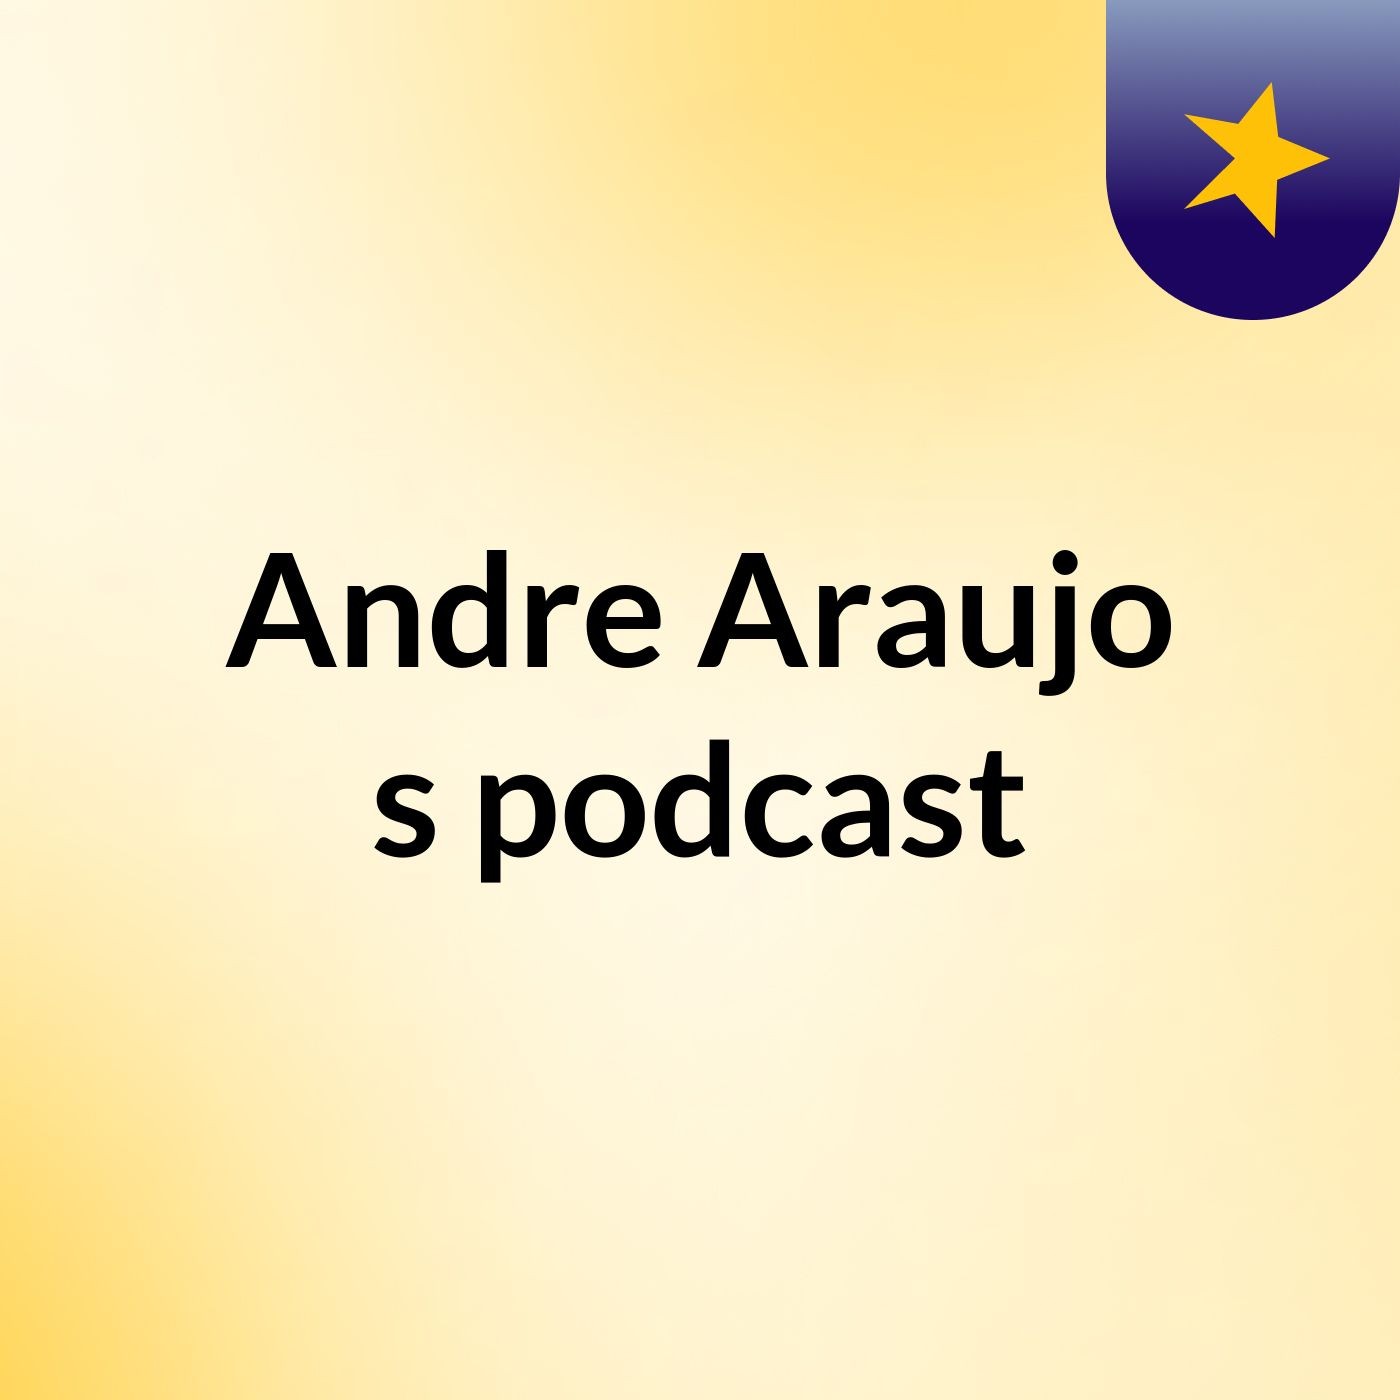 Andre Araujo's podcast